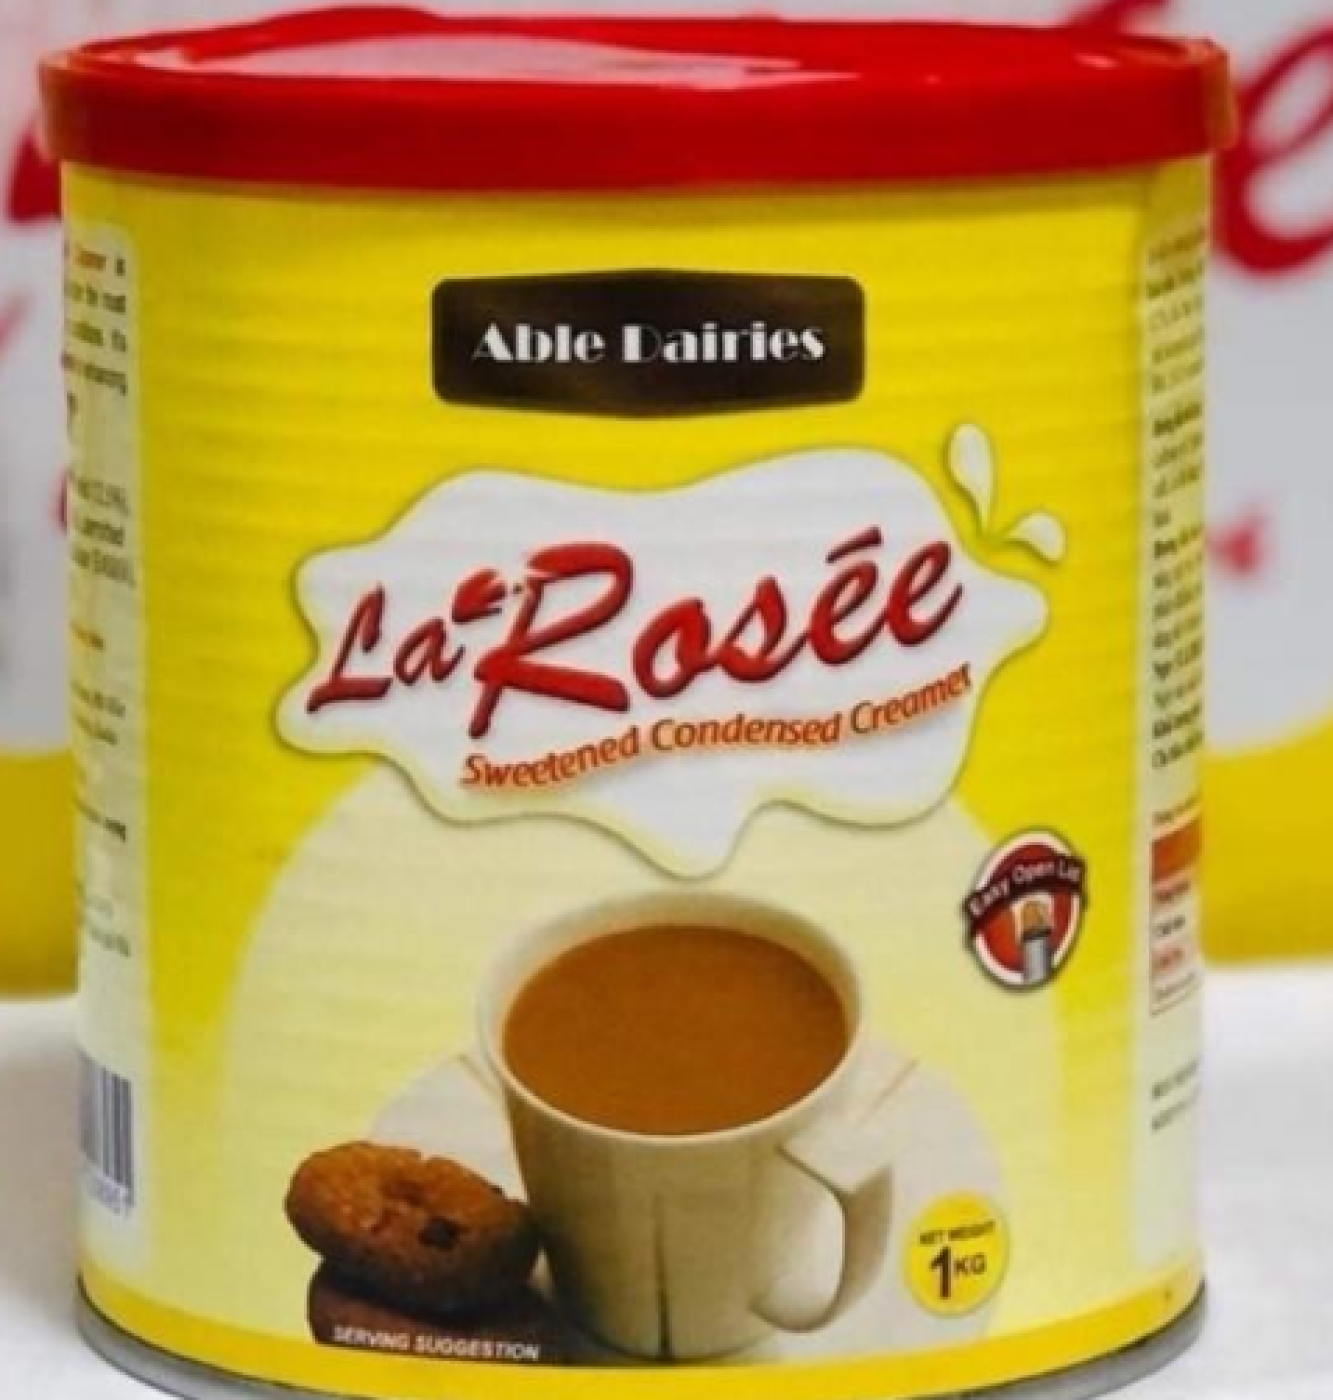 Sữa đặc La Rosee (LaRosee) nhập khẩu Malaysia Nắp Giật 1kg